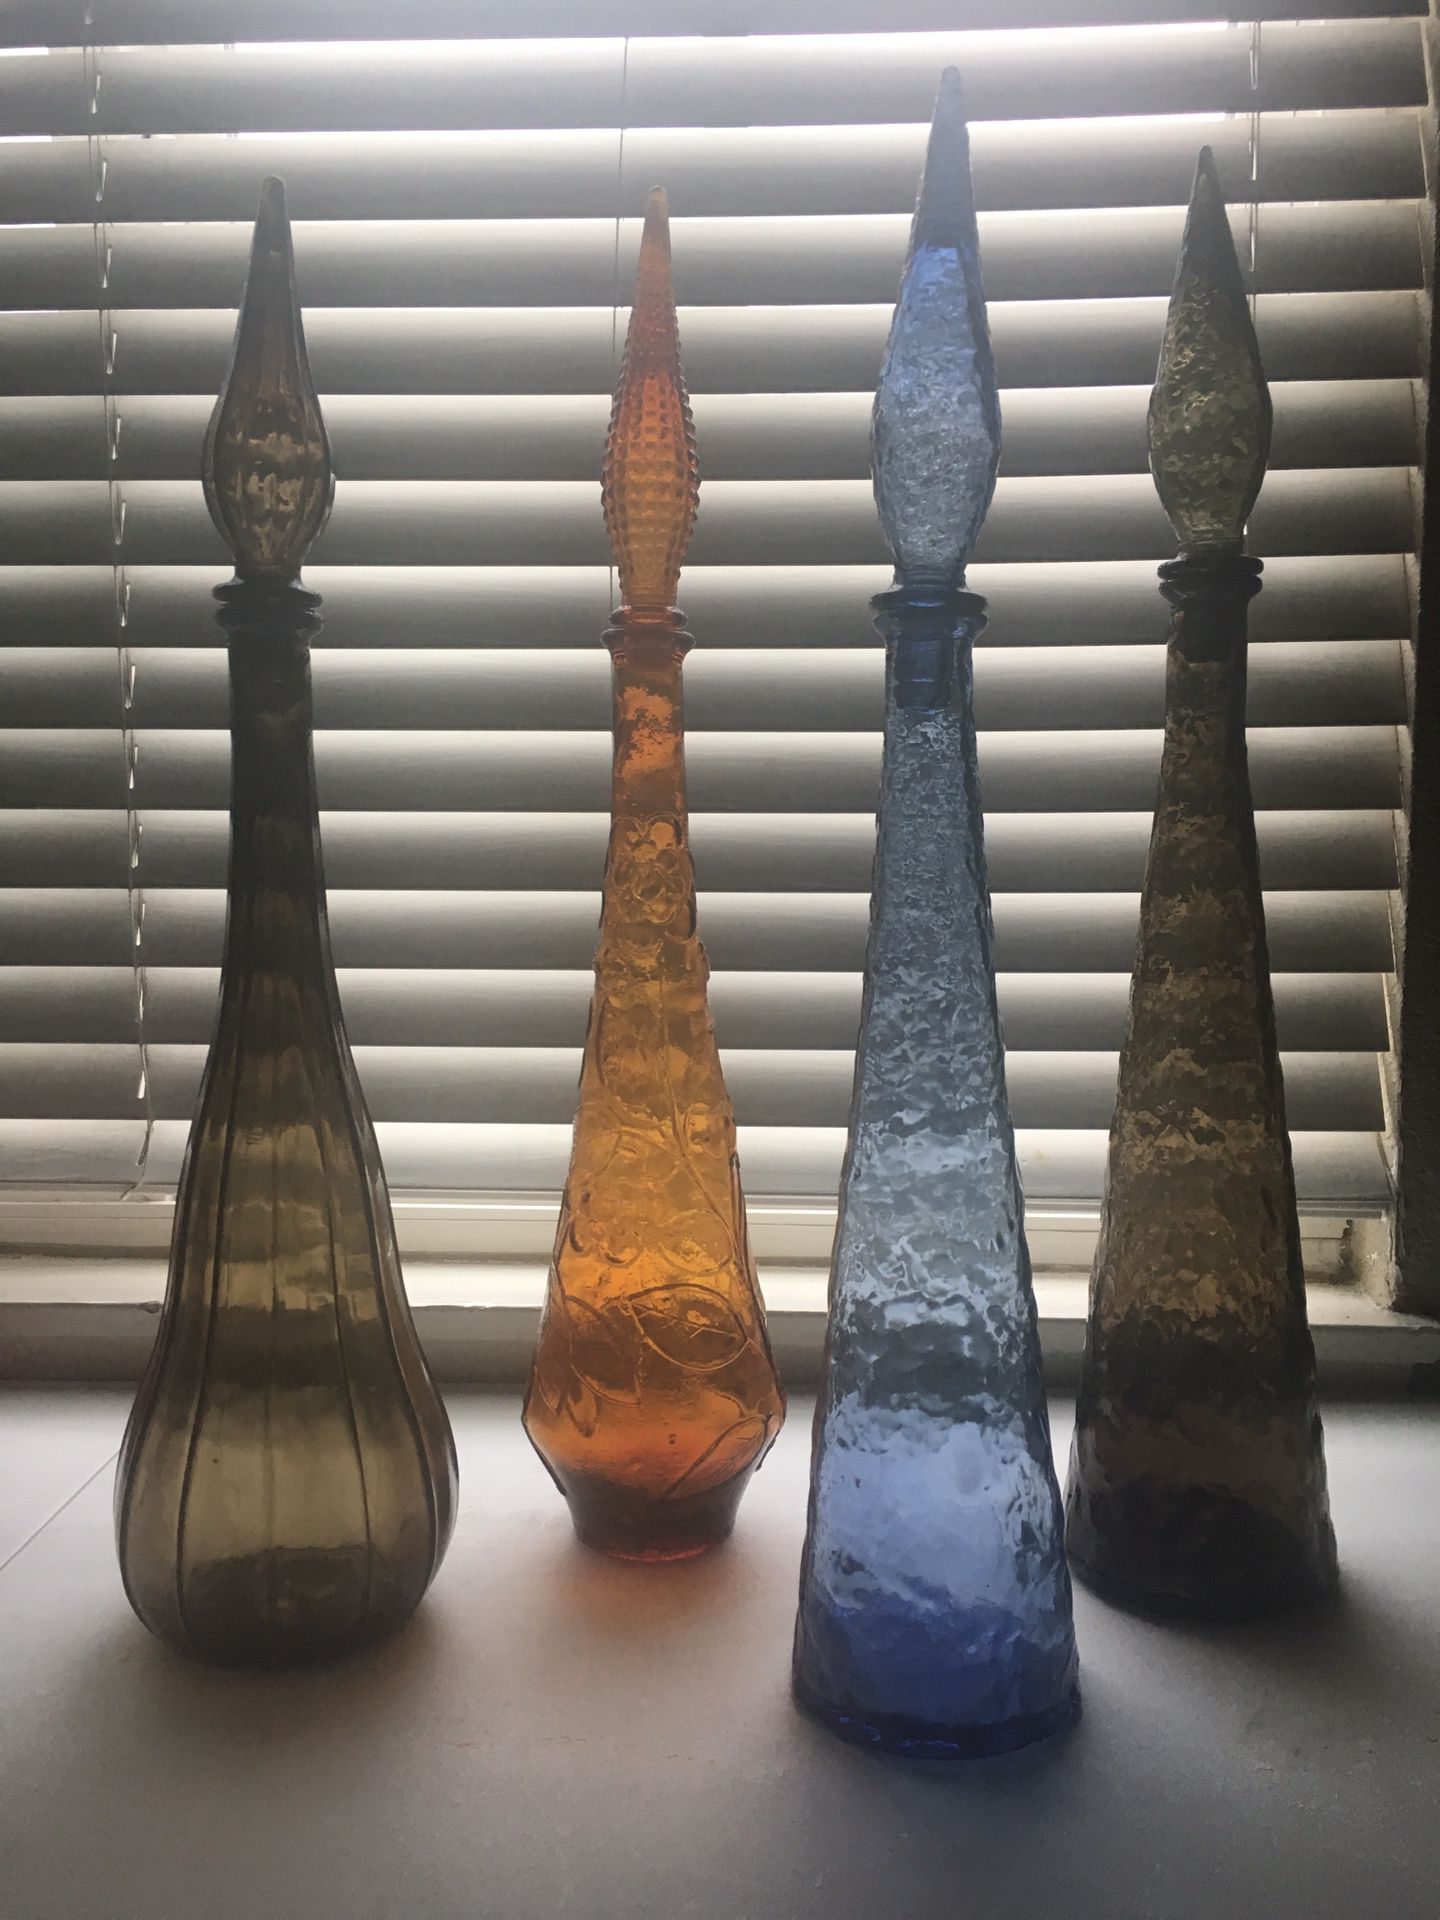 Antique glass bottles